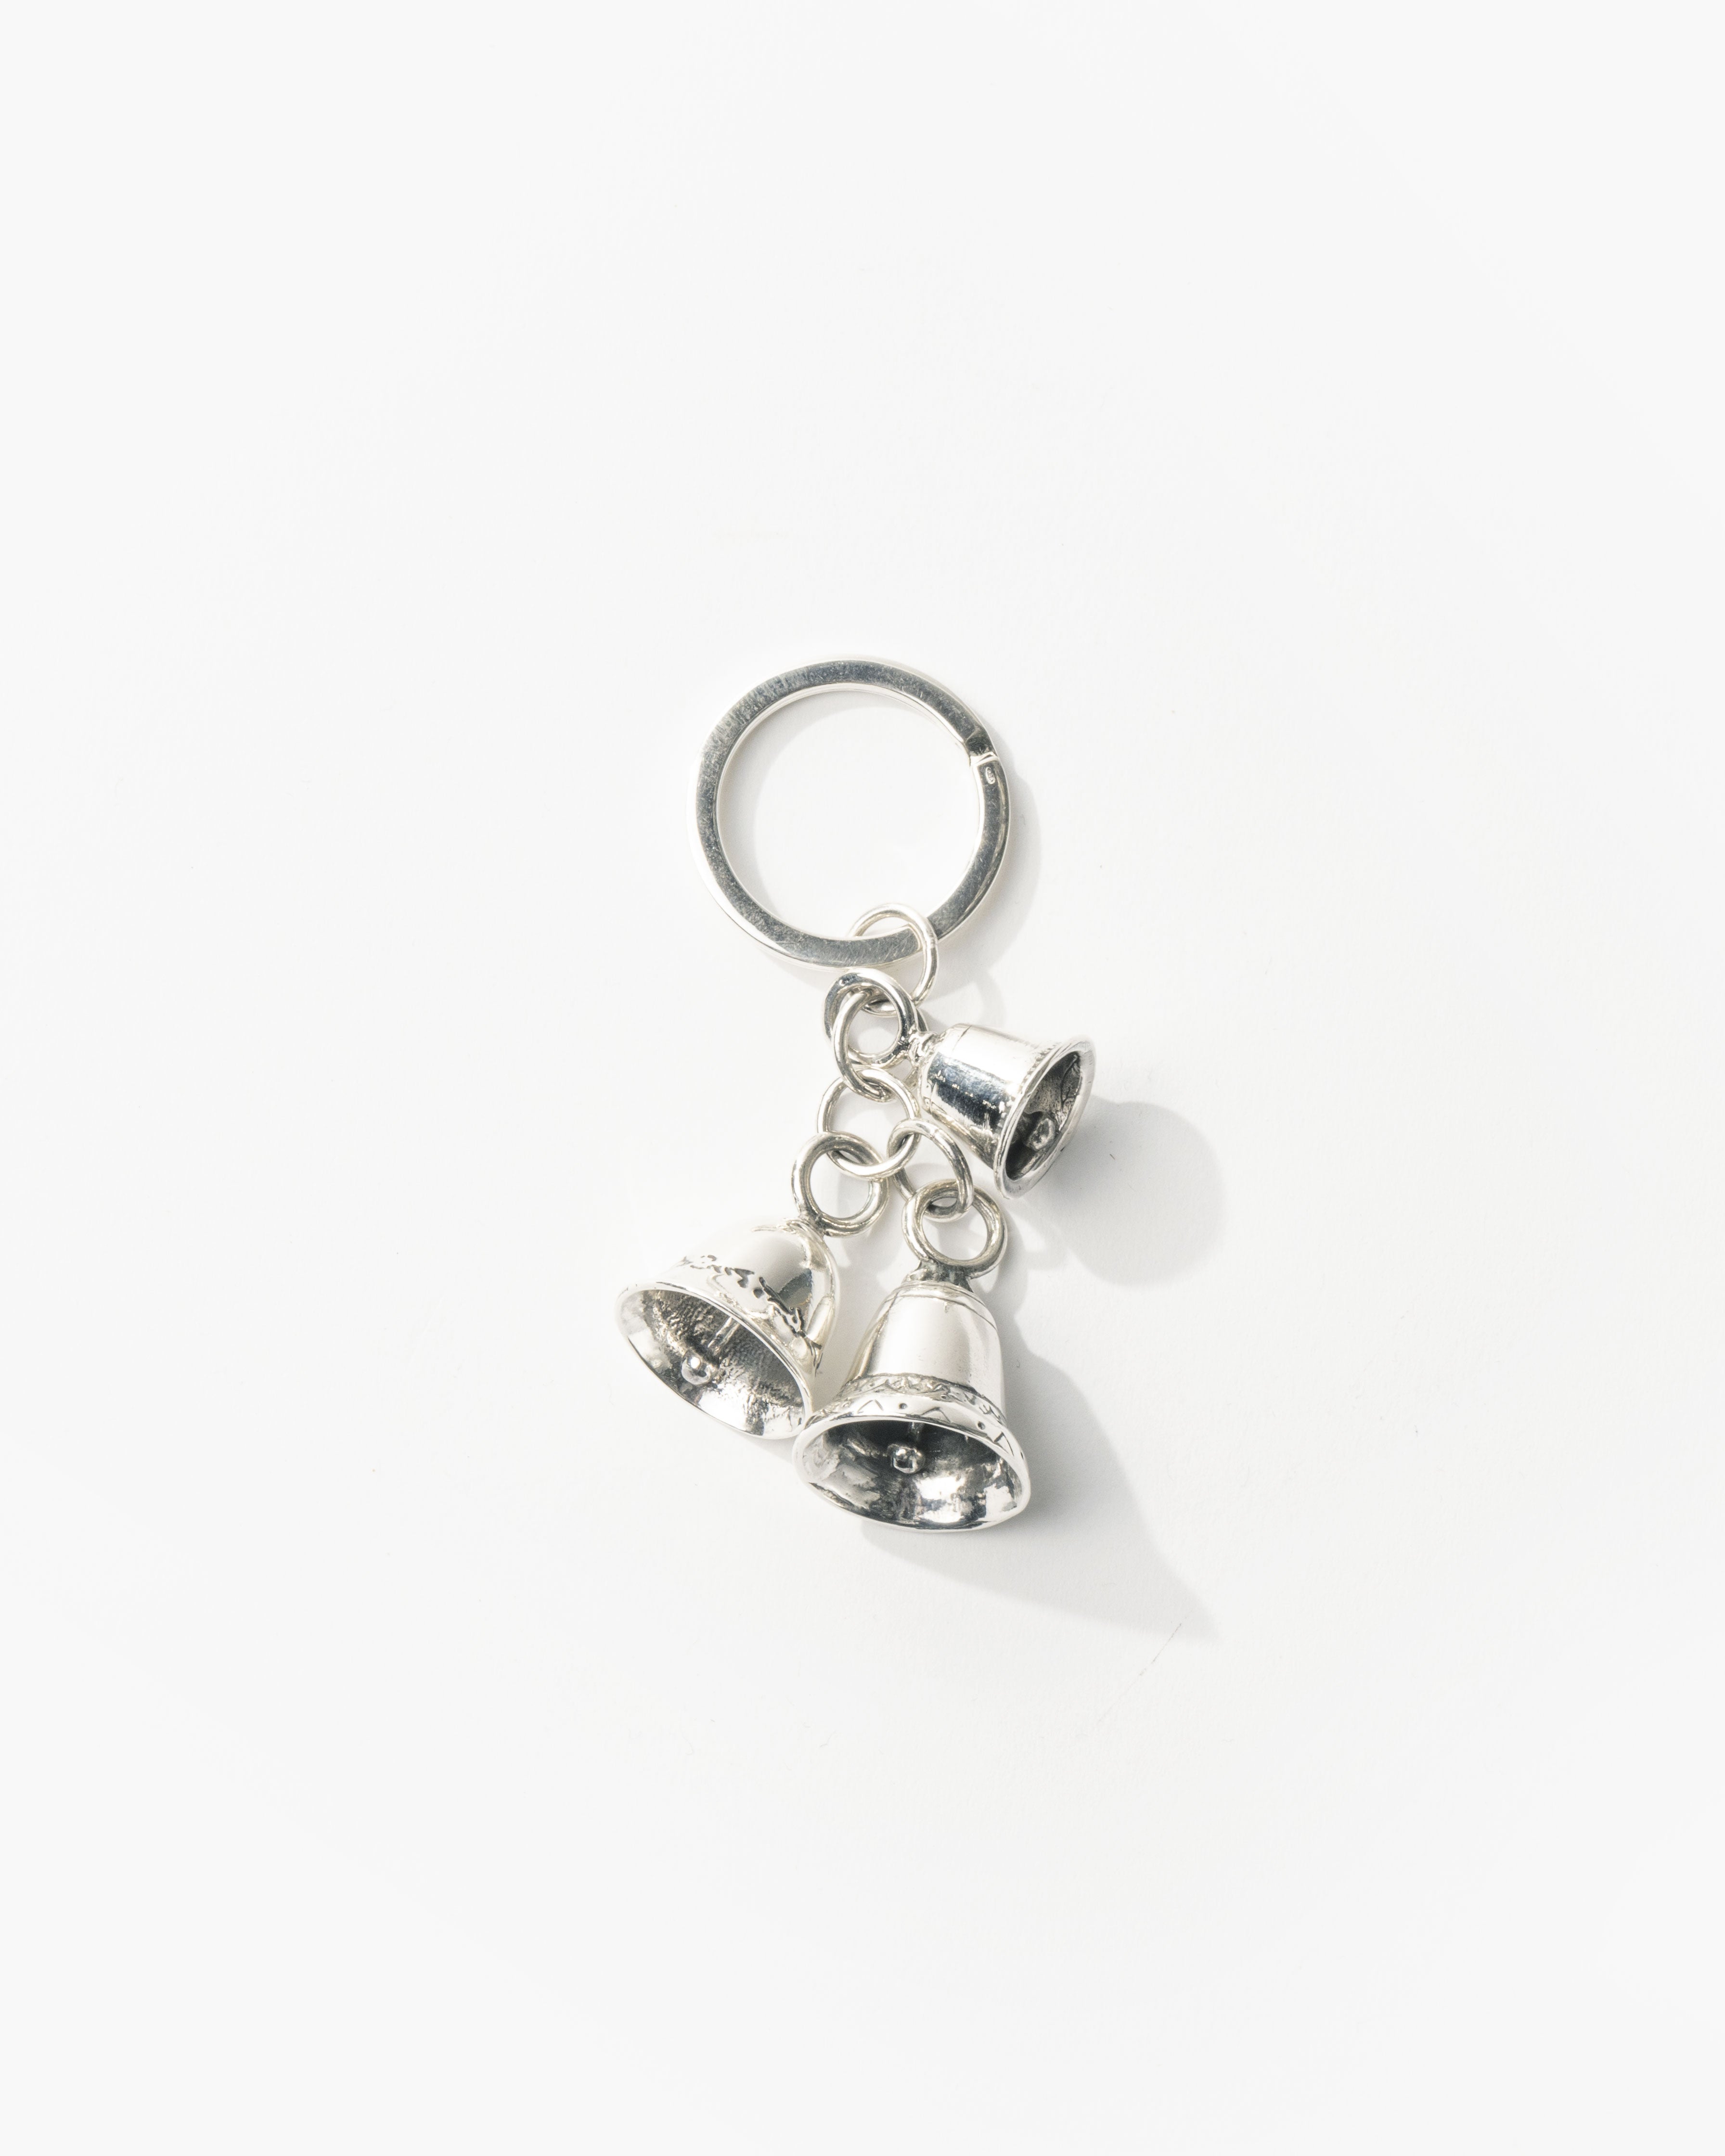  TEHAUX bell pendant metal key ring bracelet key ring mini  backpack keychain antique decorative bell key ring backpack pendants mini  fortune lucky bells charm small ornament key pendants : Arts, Crafts